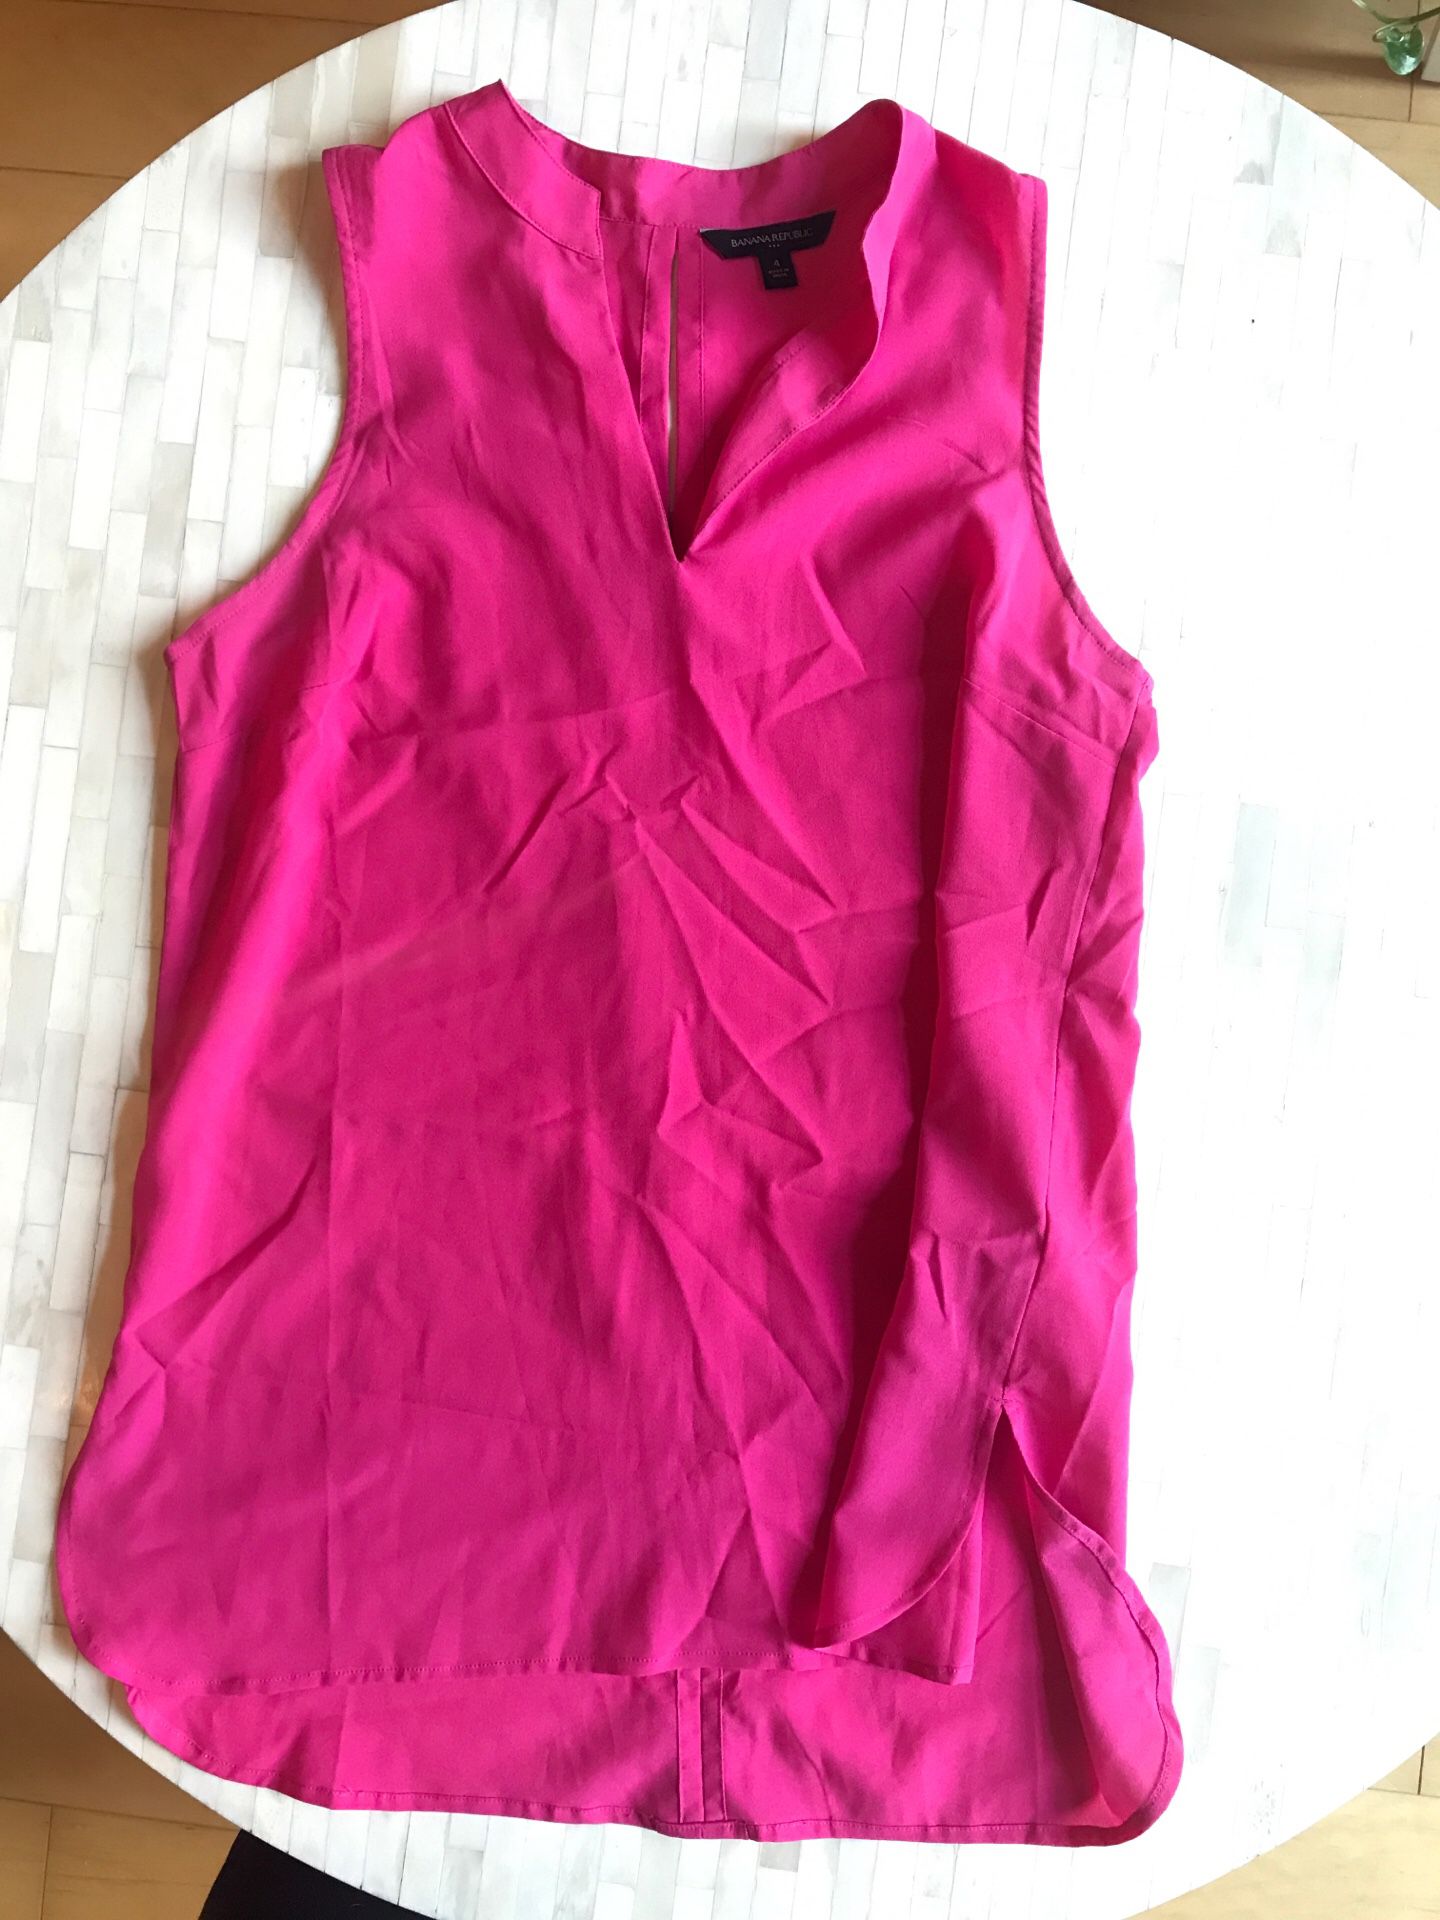 Pink banana republic blouse - size 4